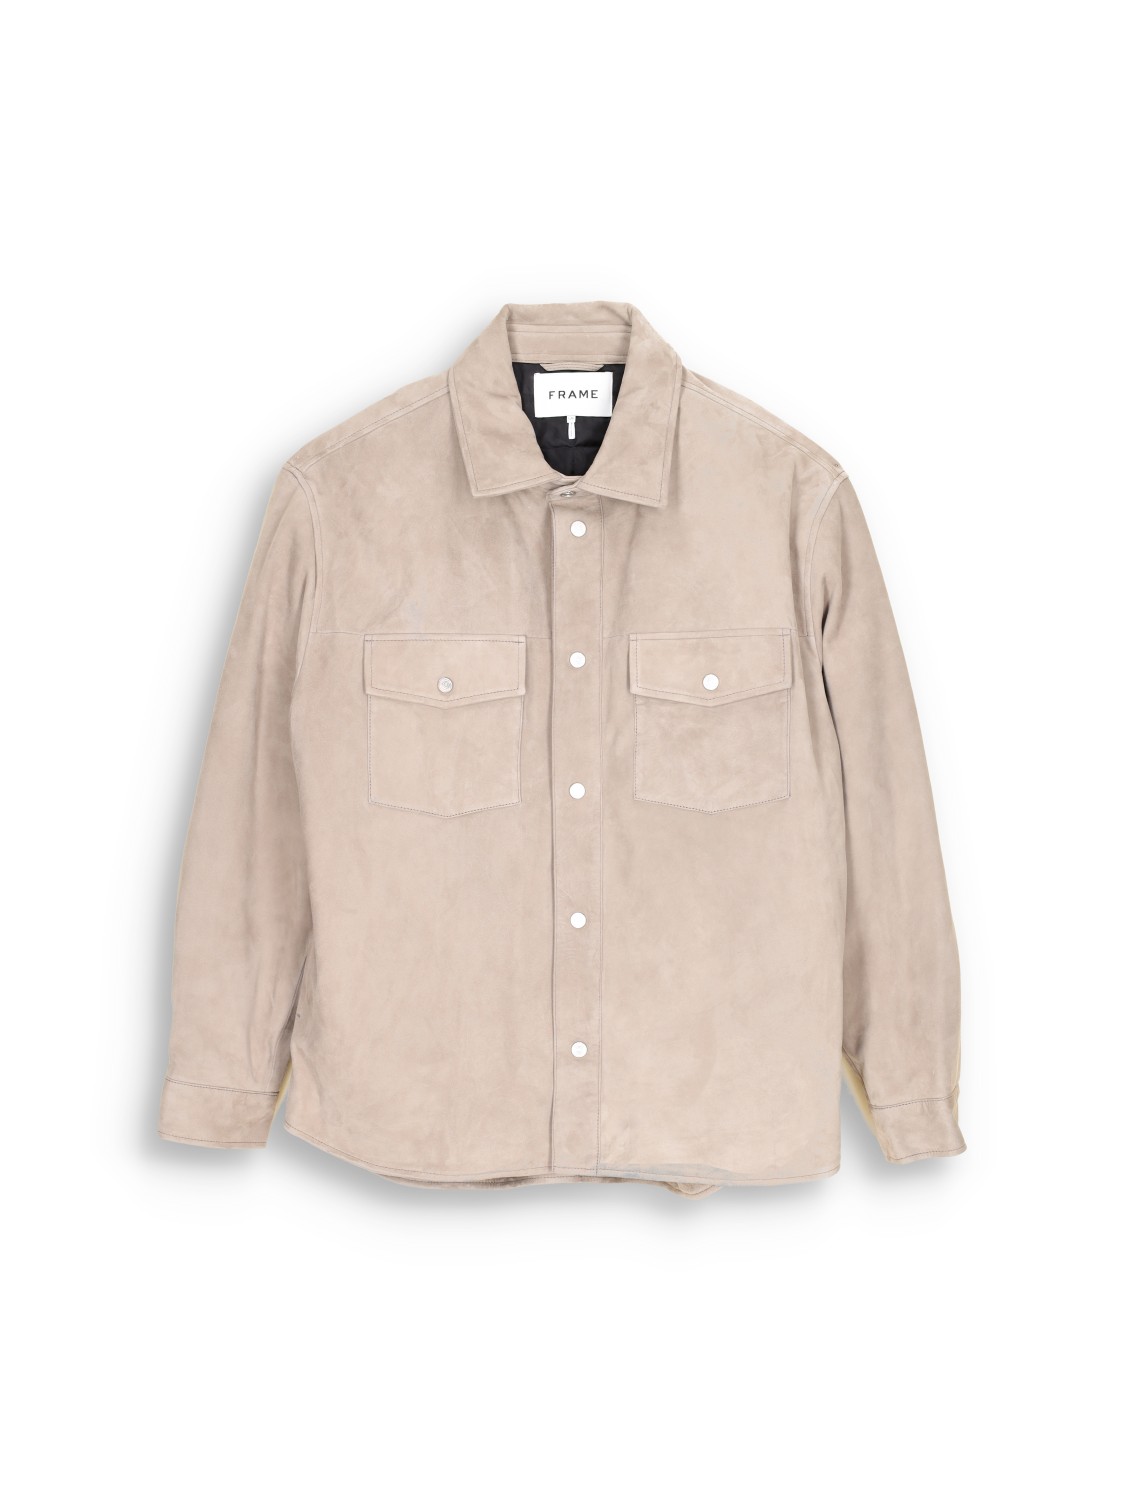 Long Sleeve Suede Shirt - Suede Shirt Jacket 